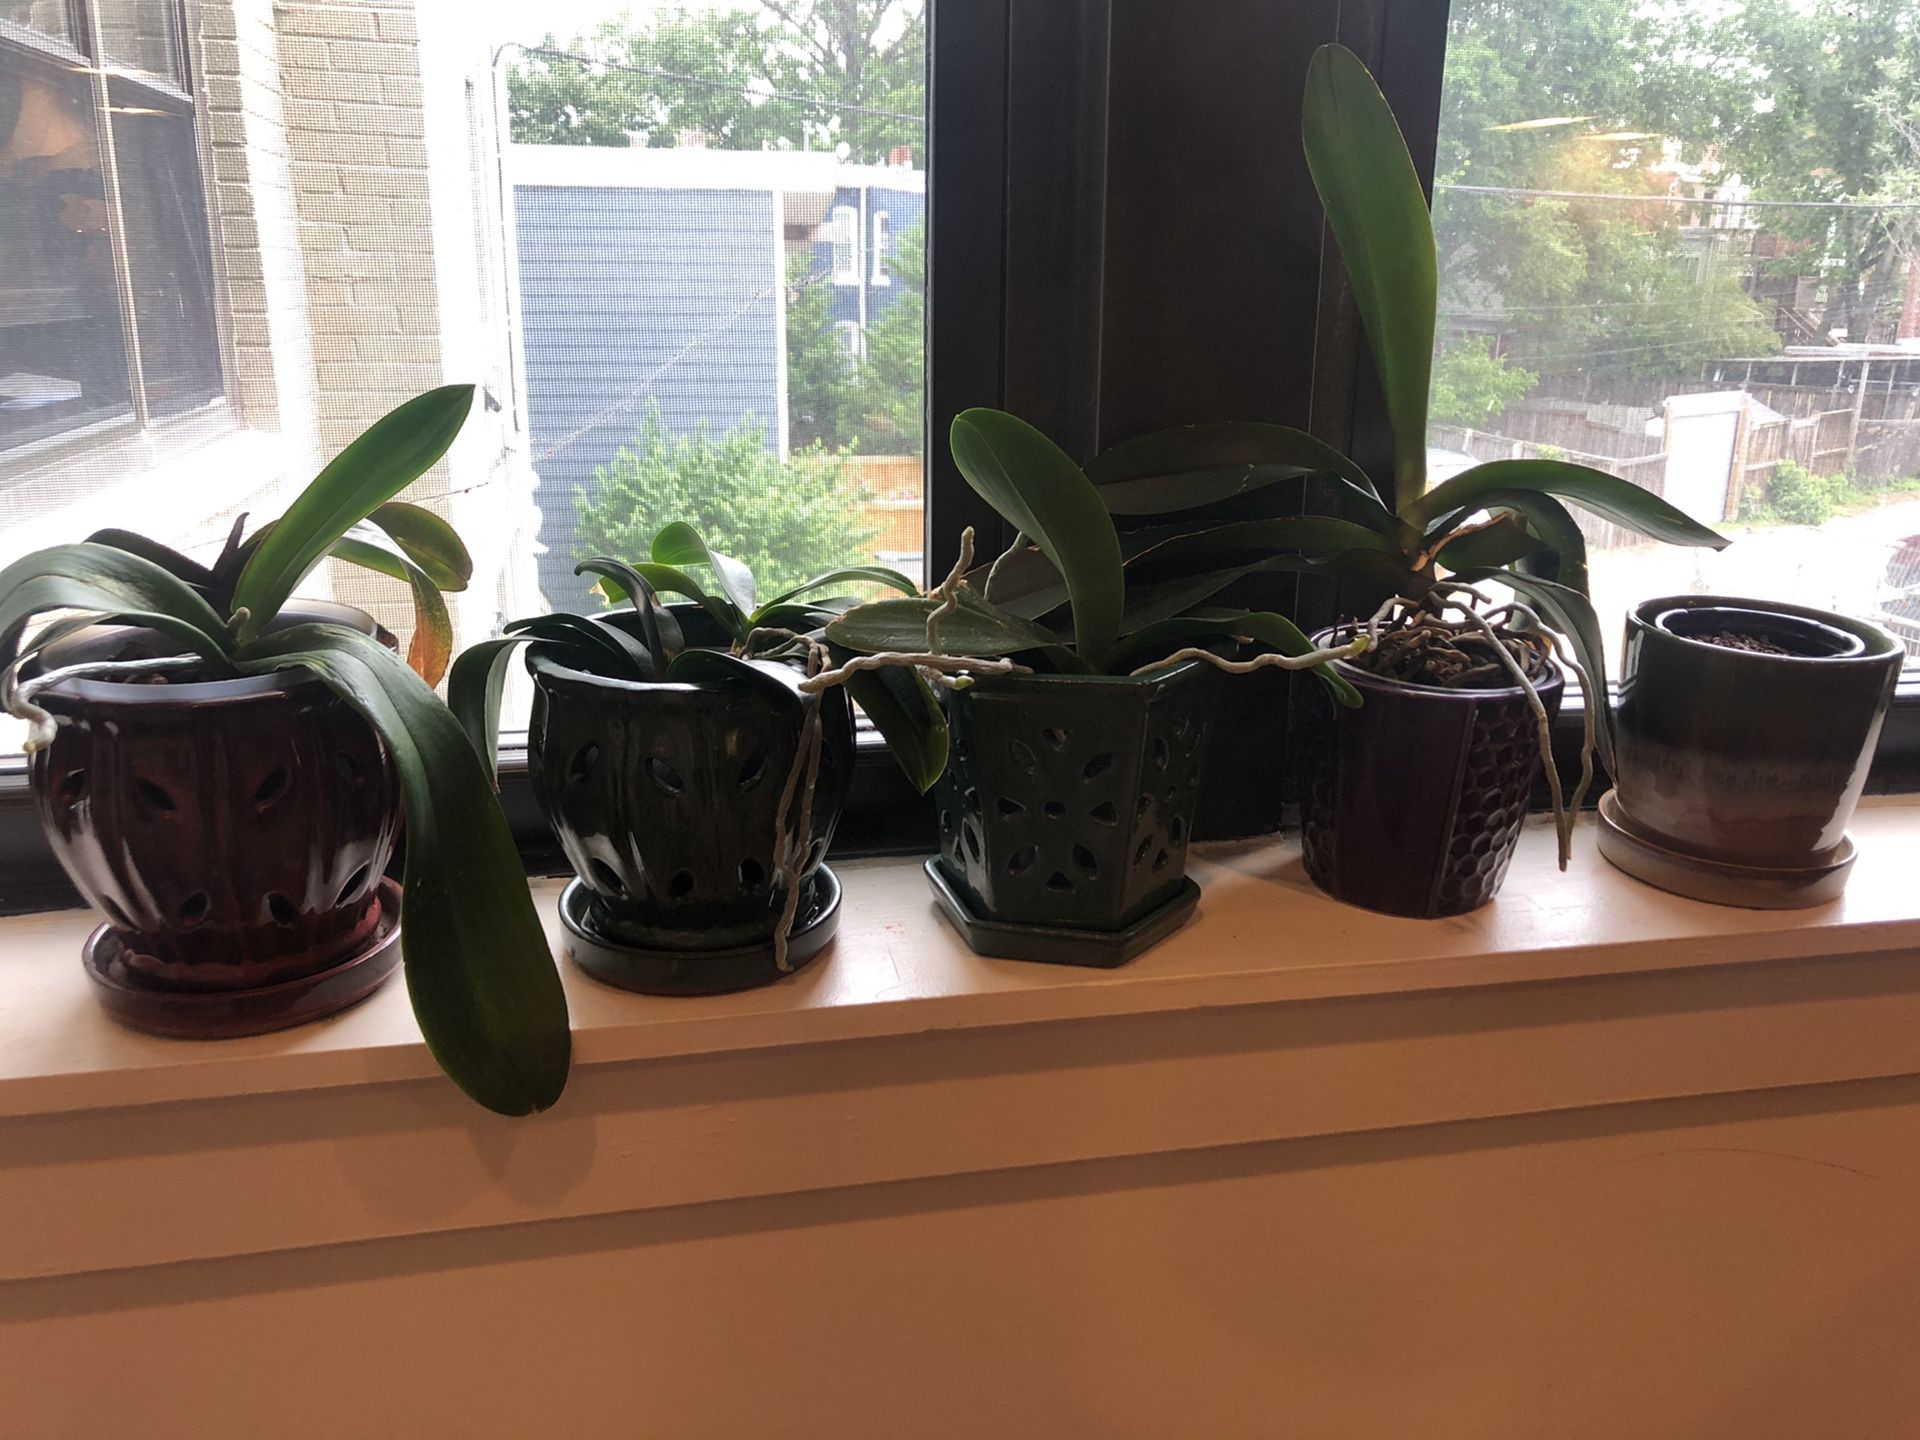 5 orchid or plant pots